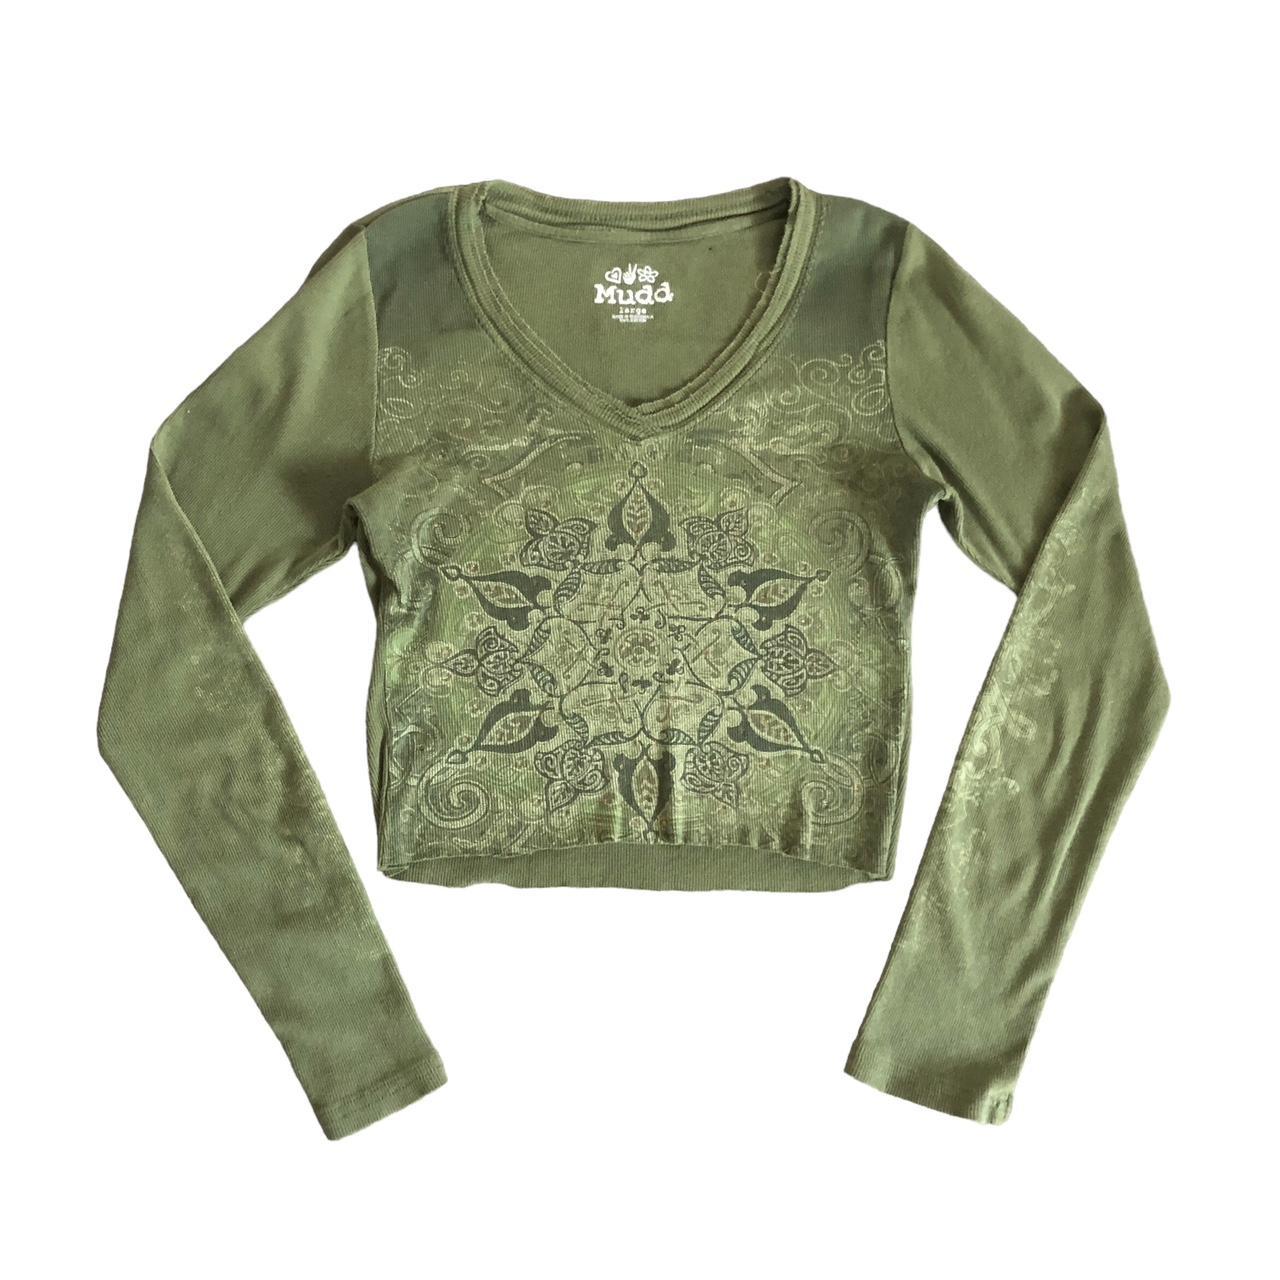 Mudd Clothing Women's Green Blouse